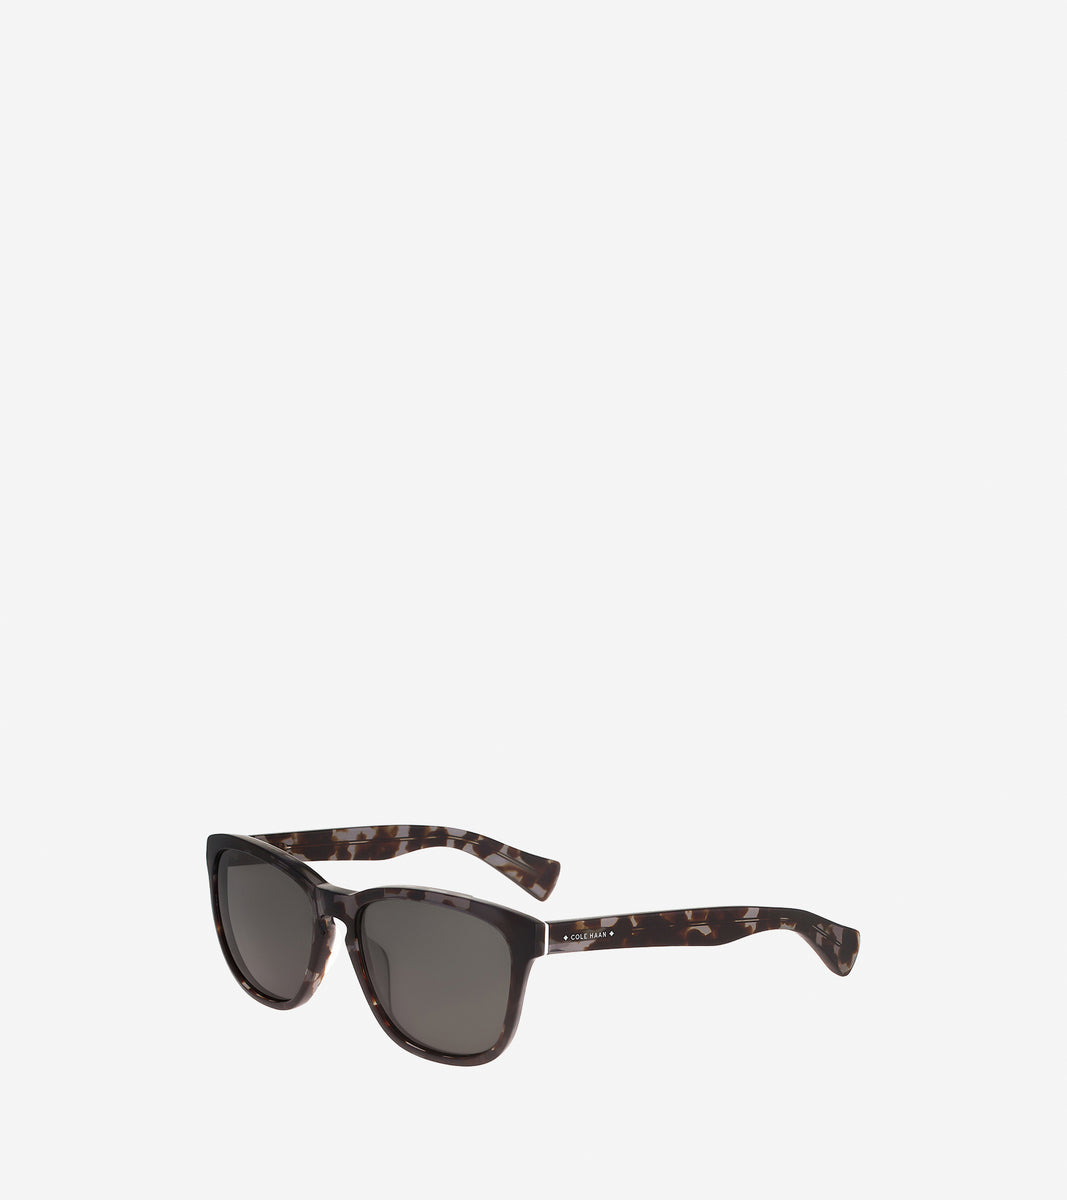 ColeHaan-Oversized Sunglasses-sg1018-Black Tortoise